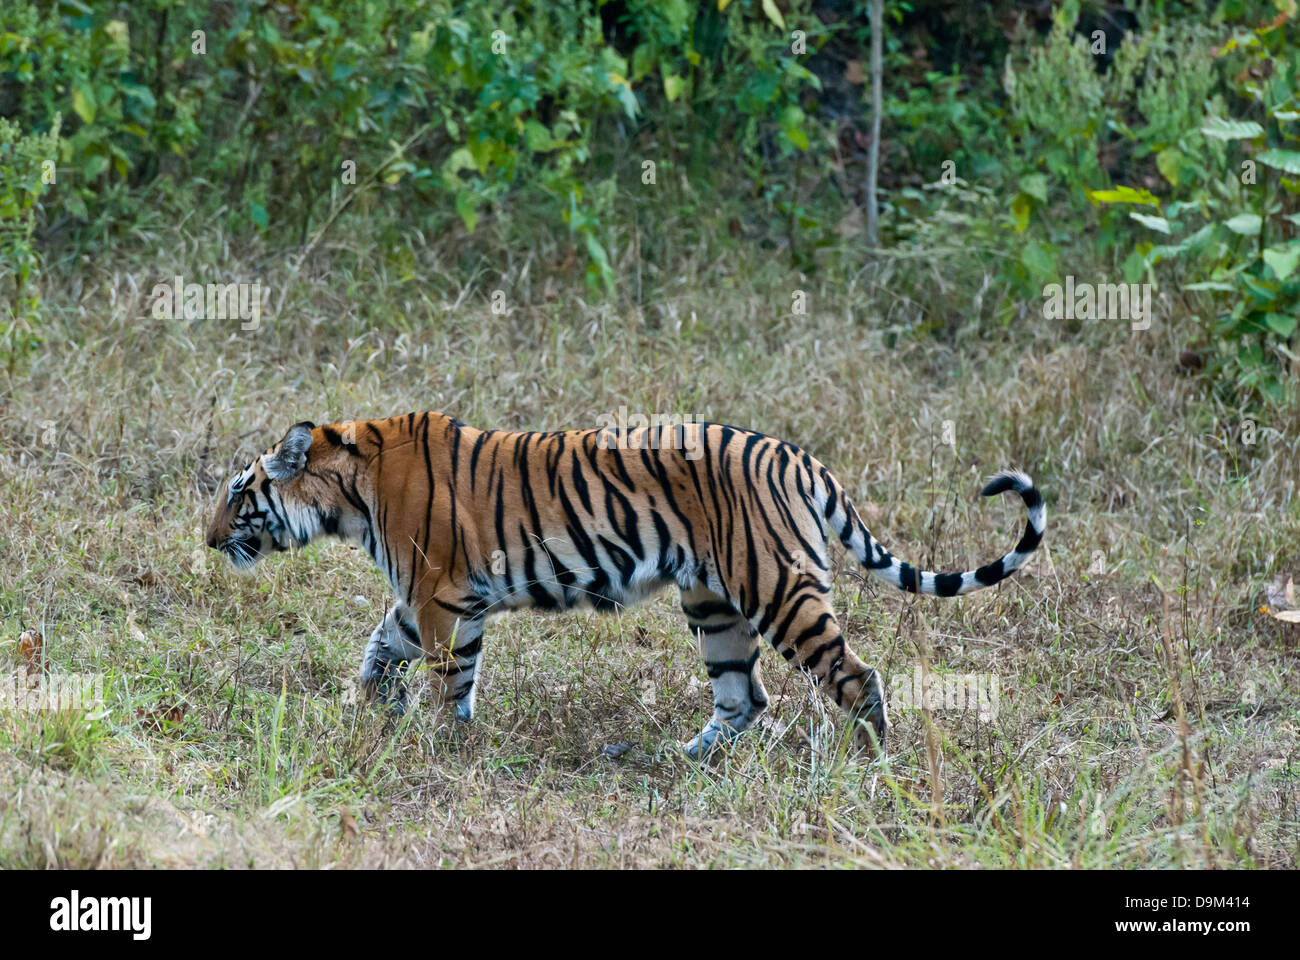 Bengal tiger walking in Kanha National Park, India, Stock Photo